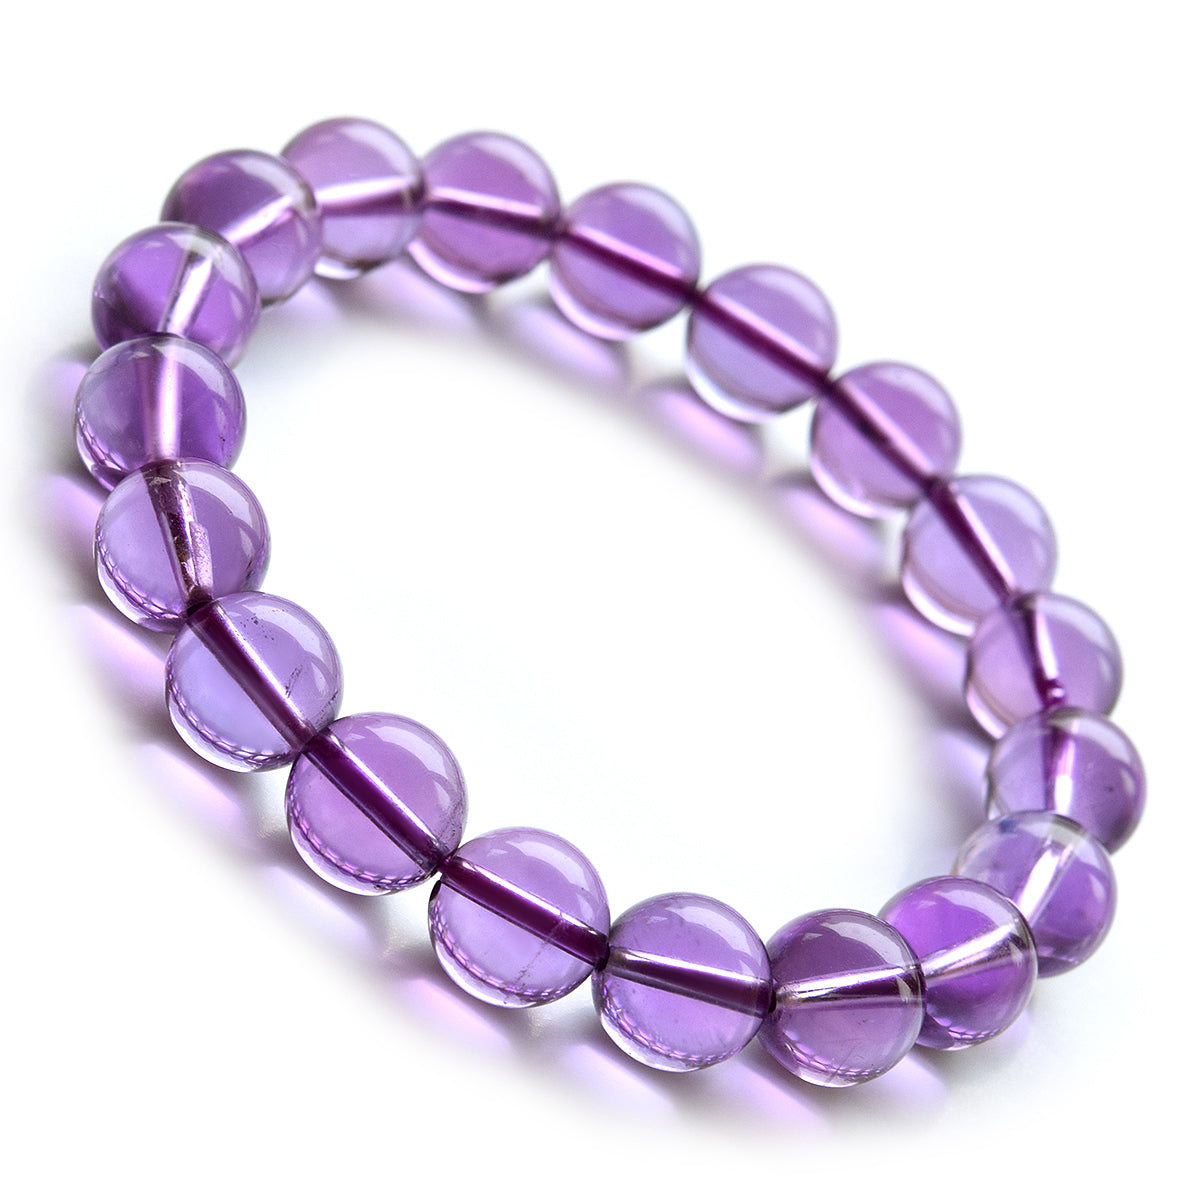 Transparent Light Purple Amethyst Bracelet